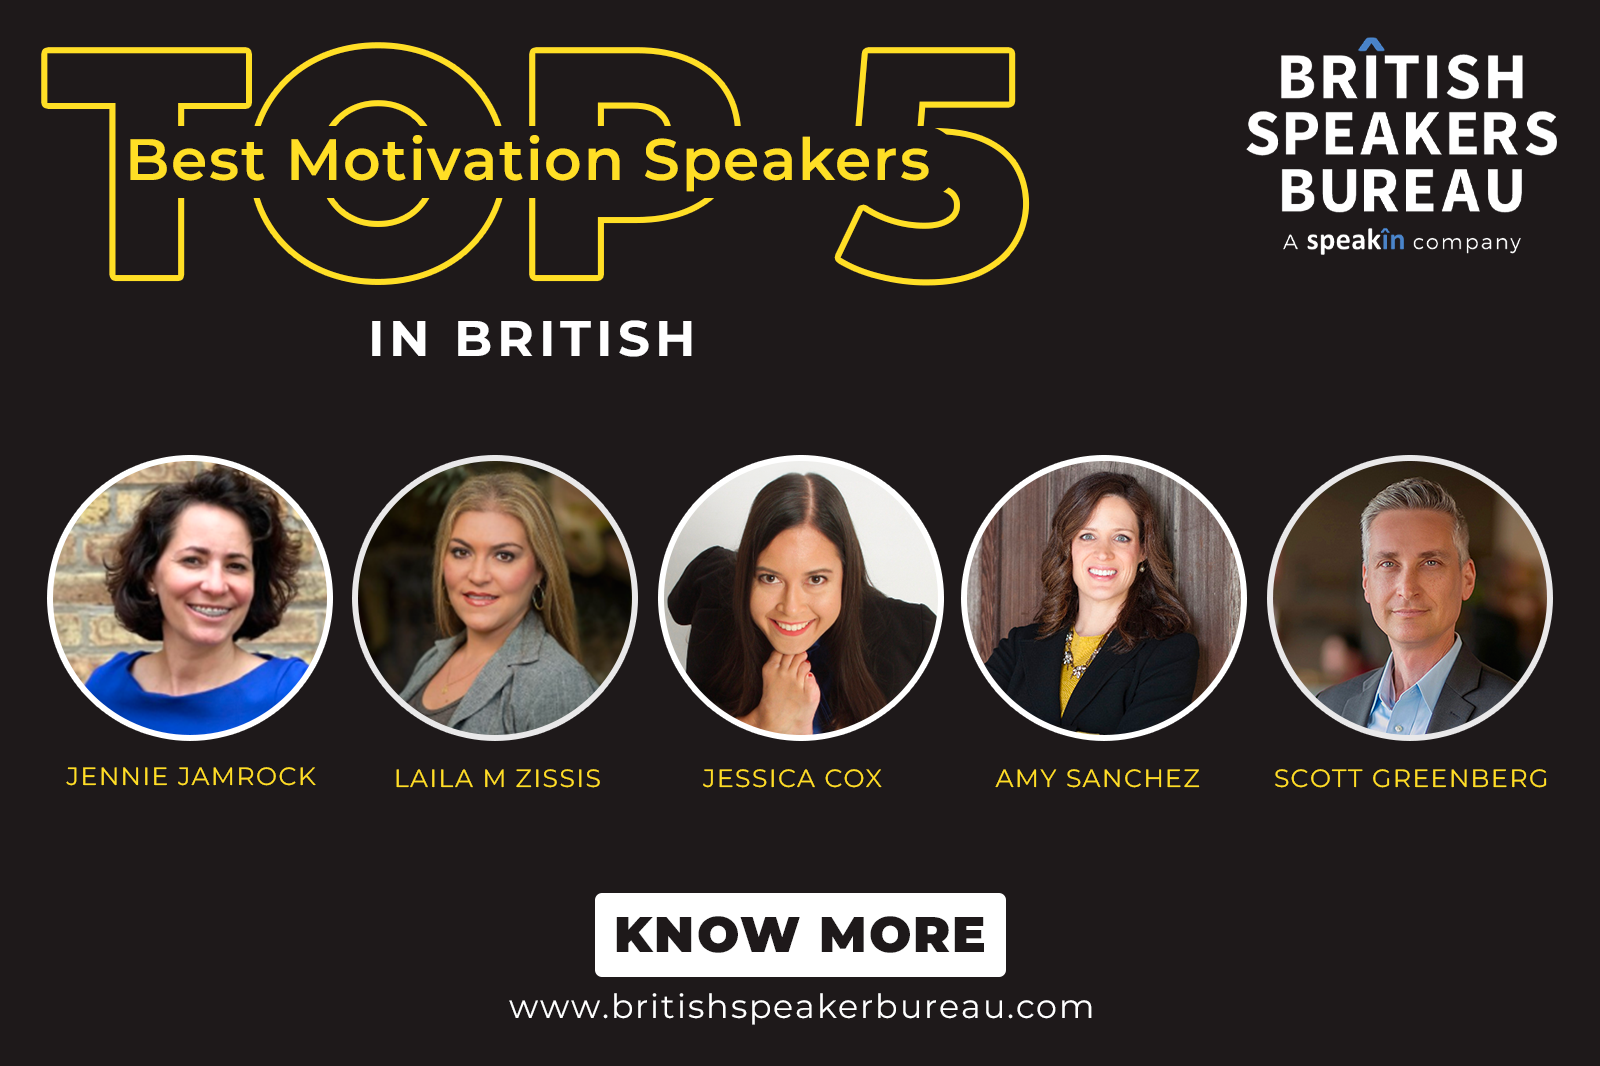 Top 5 Best Motivational Speakers in British